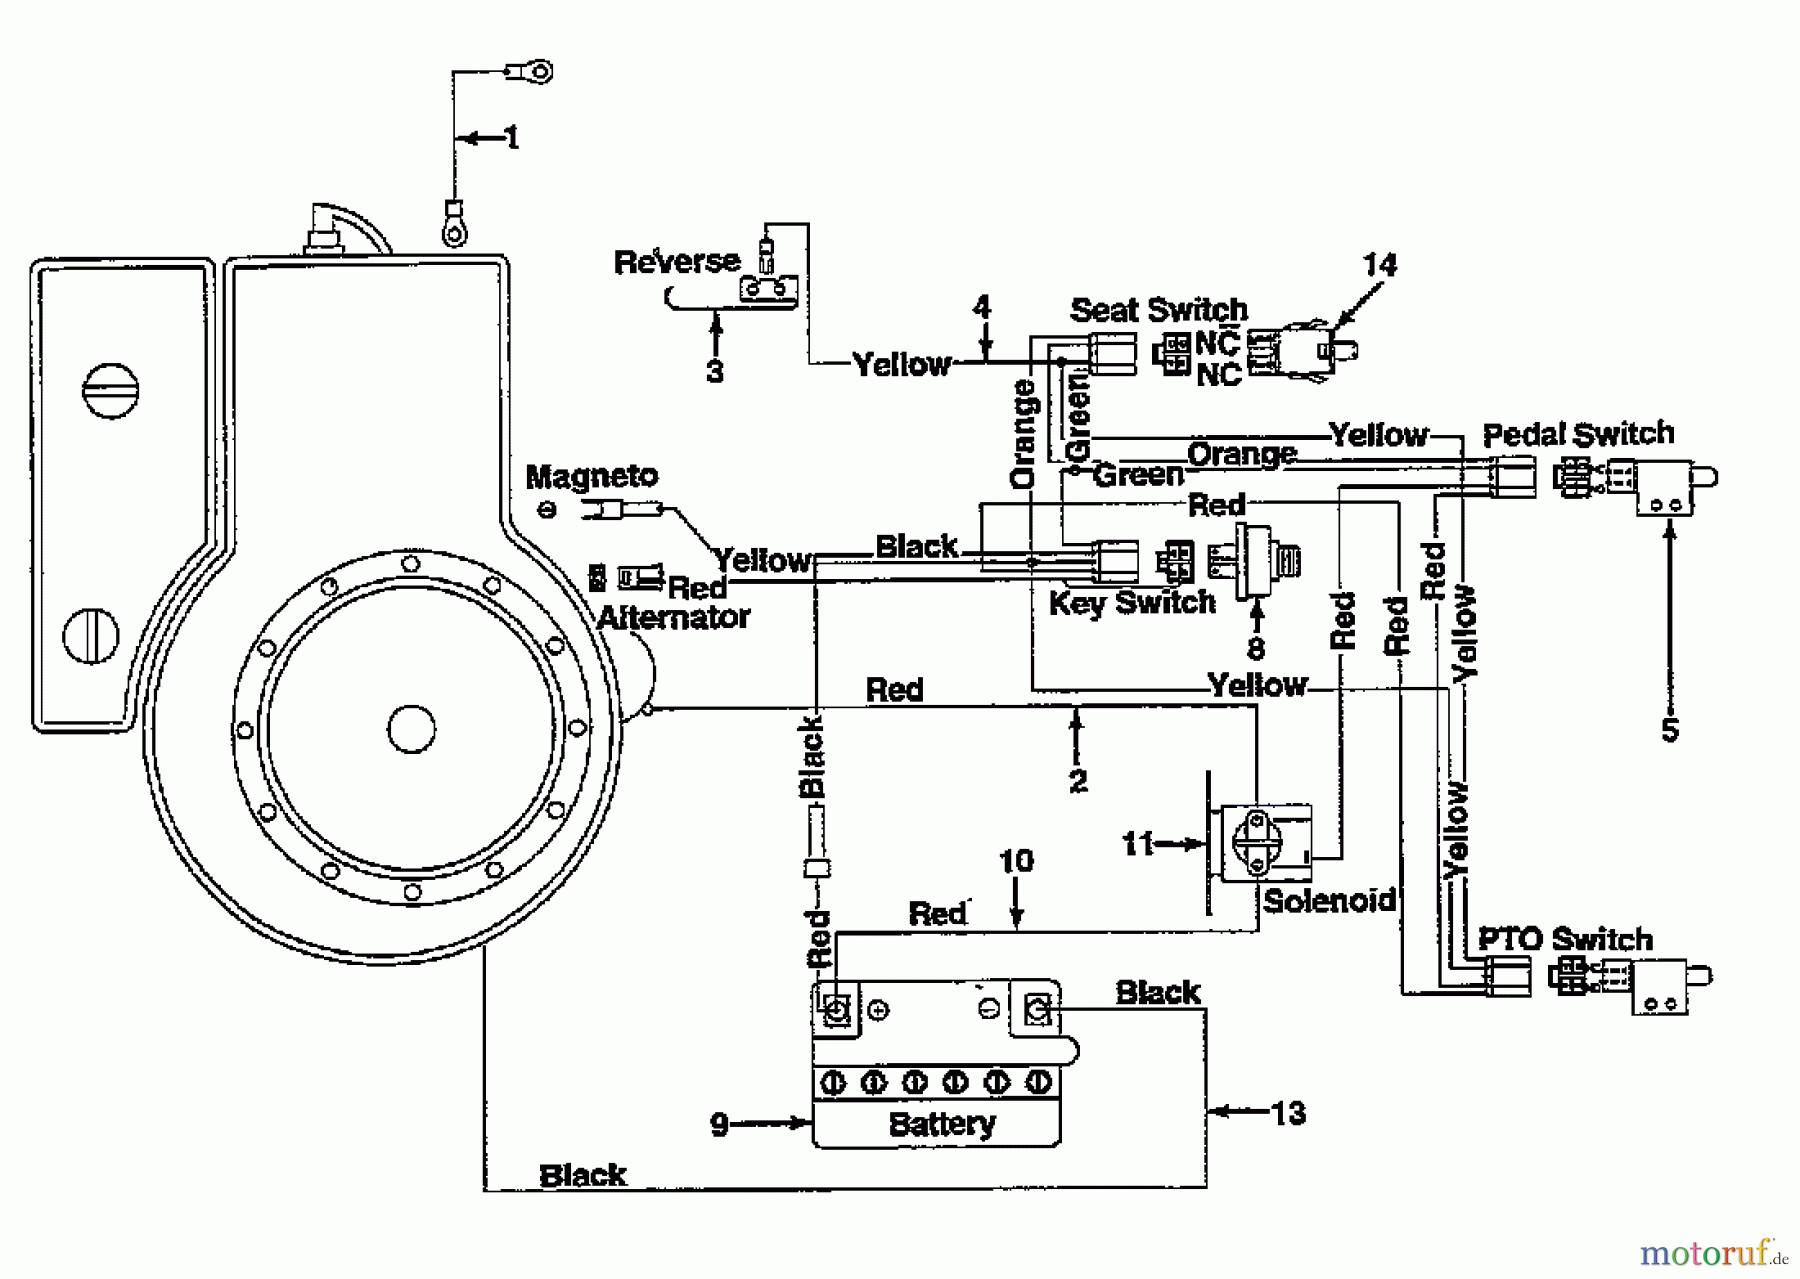  Raiffeisen Lawn tractors 8/30 133A560C628  (1993) Wiring diagram